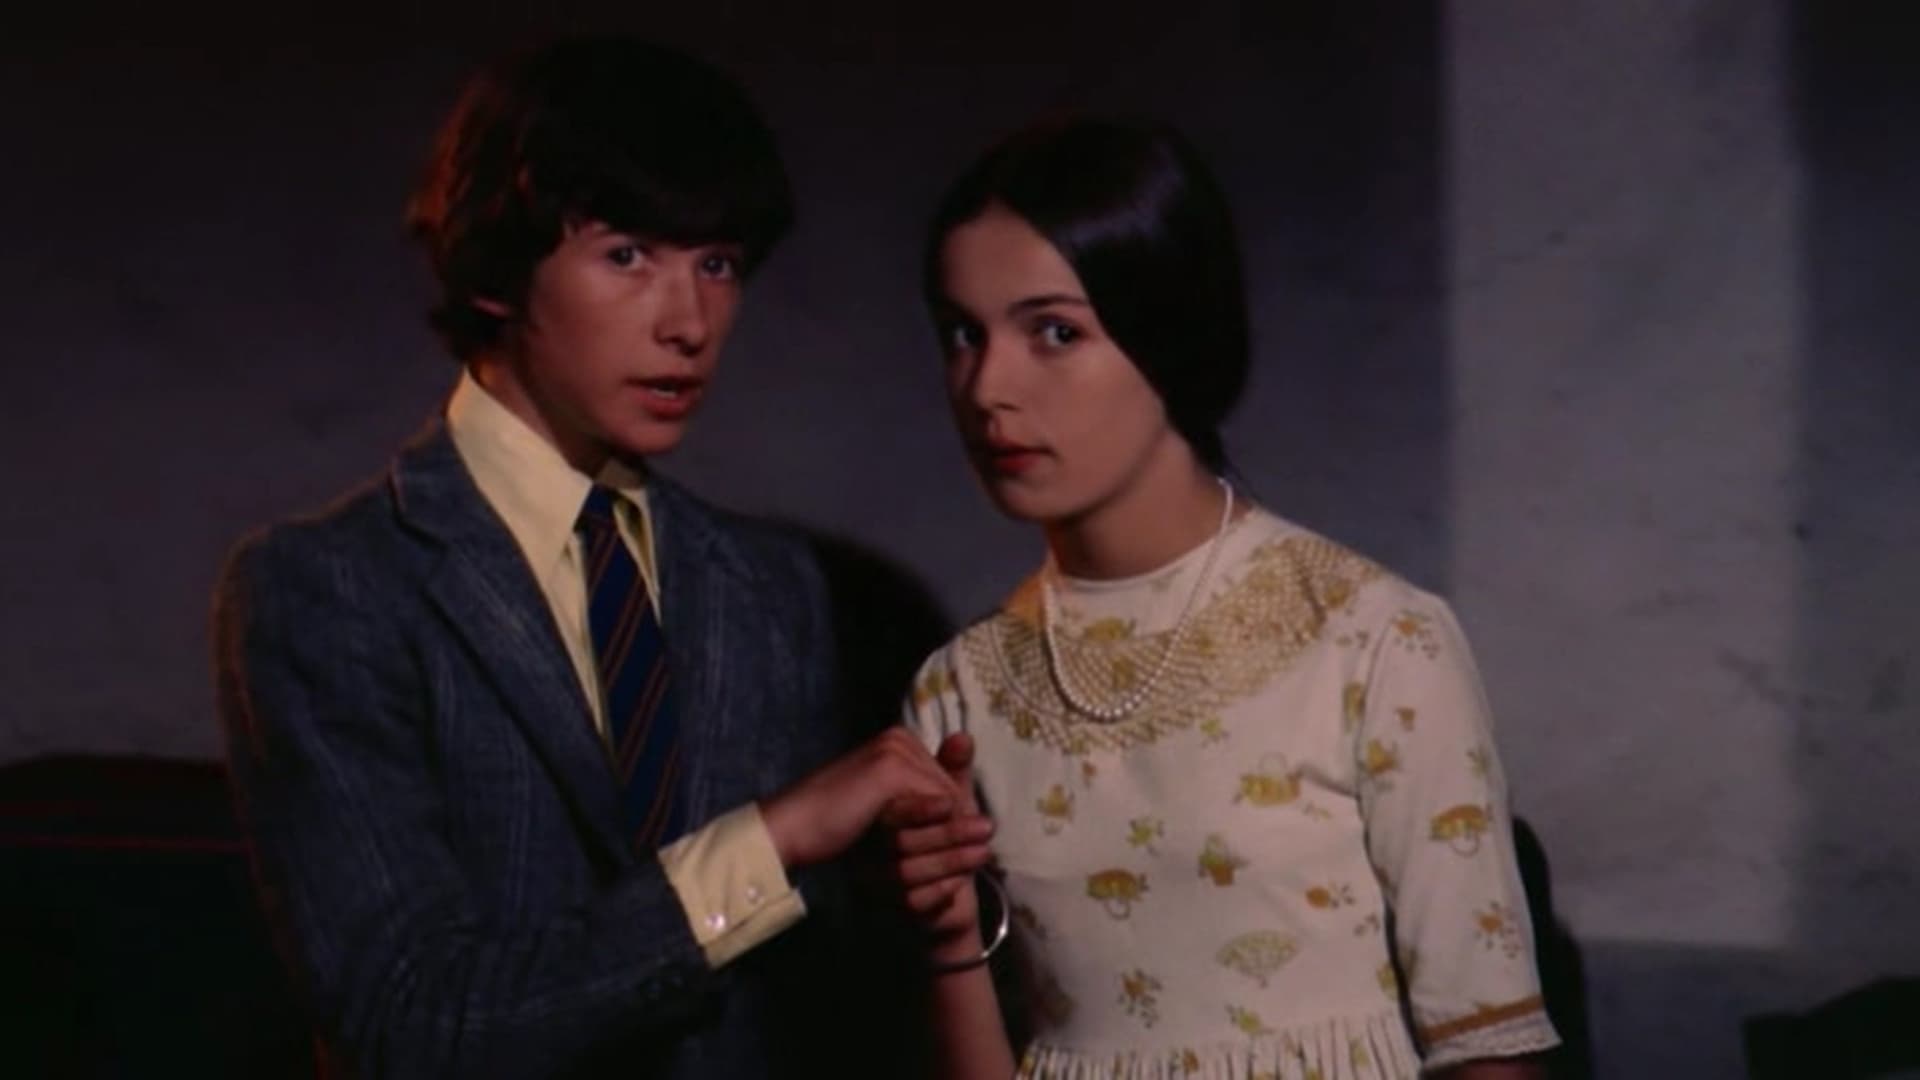 Friends (1971)